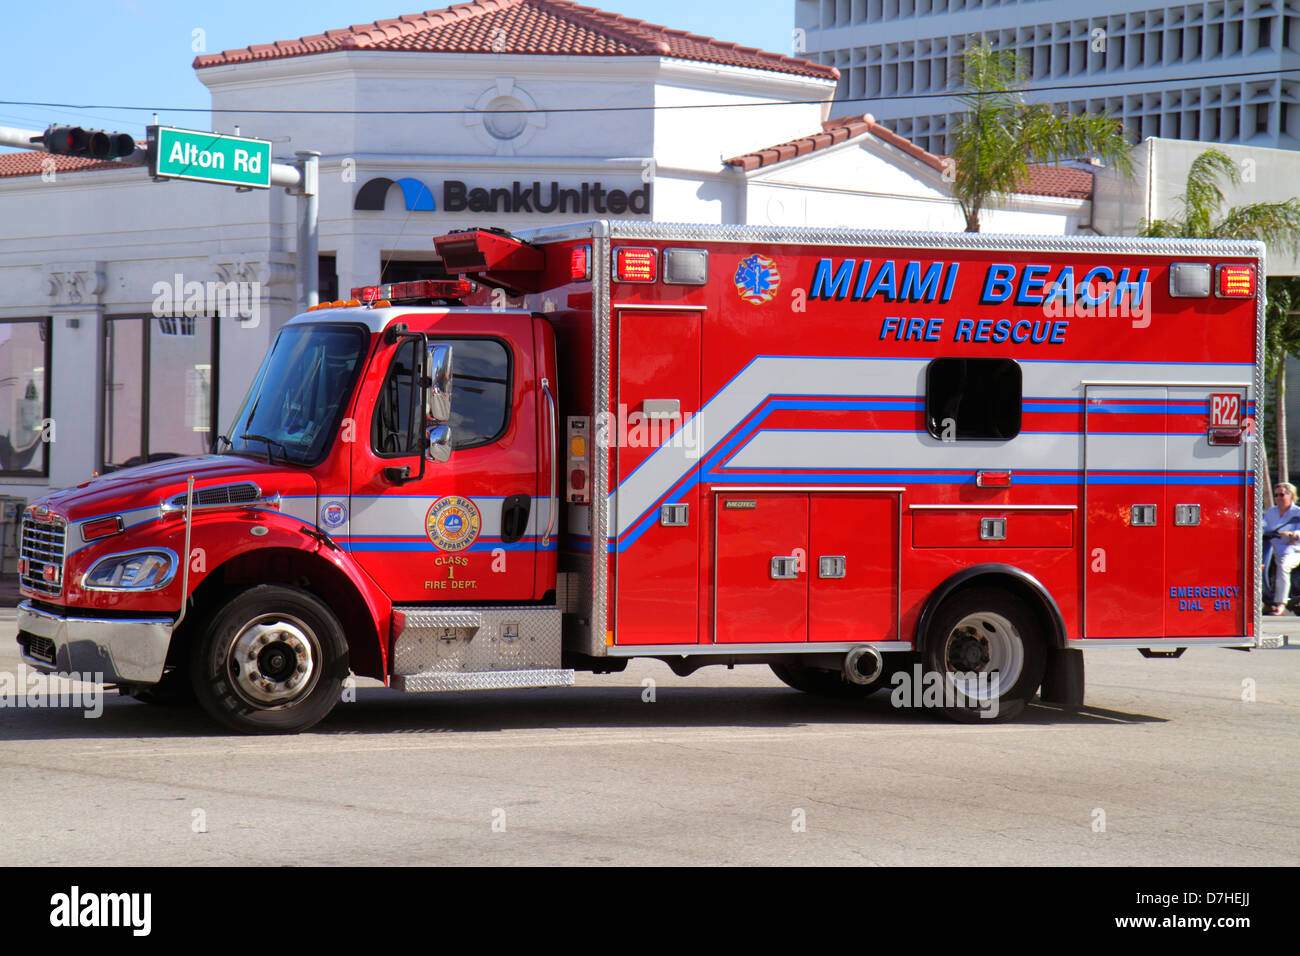 Miami Beach Florida,Alton Road,Miami Beach,Fire Rescue,rouge,urgence,véhicule,ambulance,FL121231096 Banque D'Images